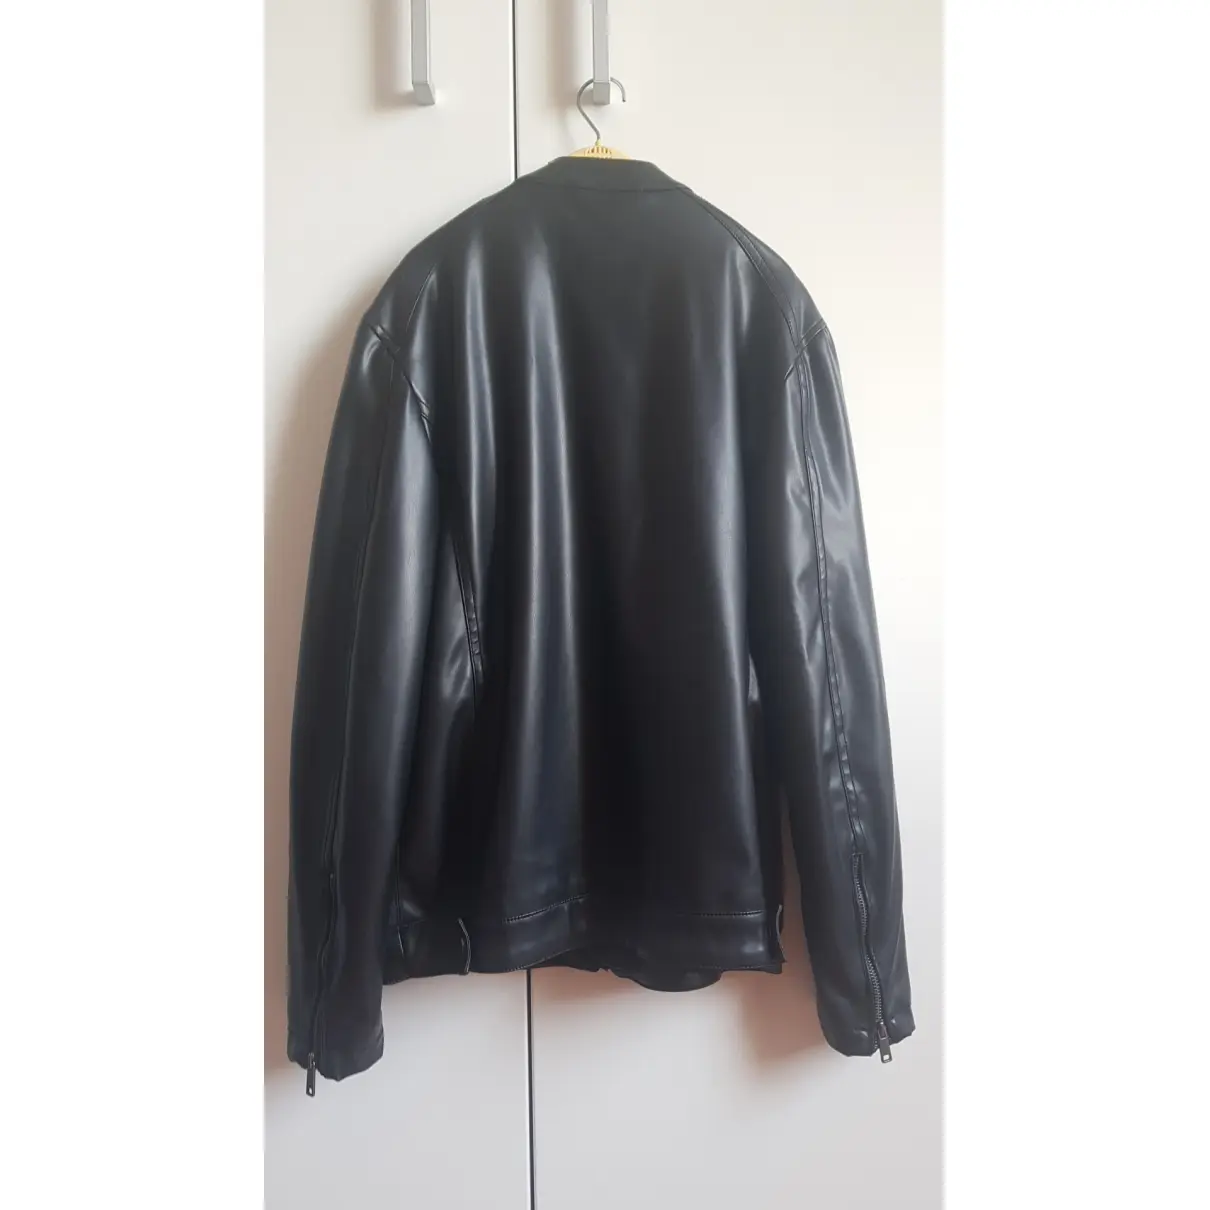 Buy Piazza italia Vegan leather jacket online